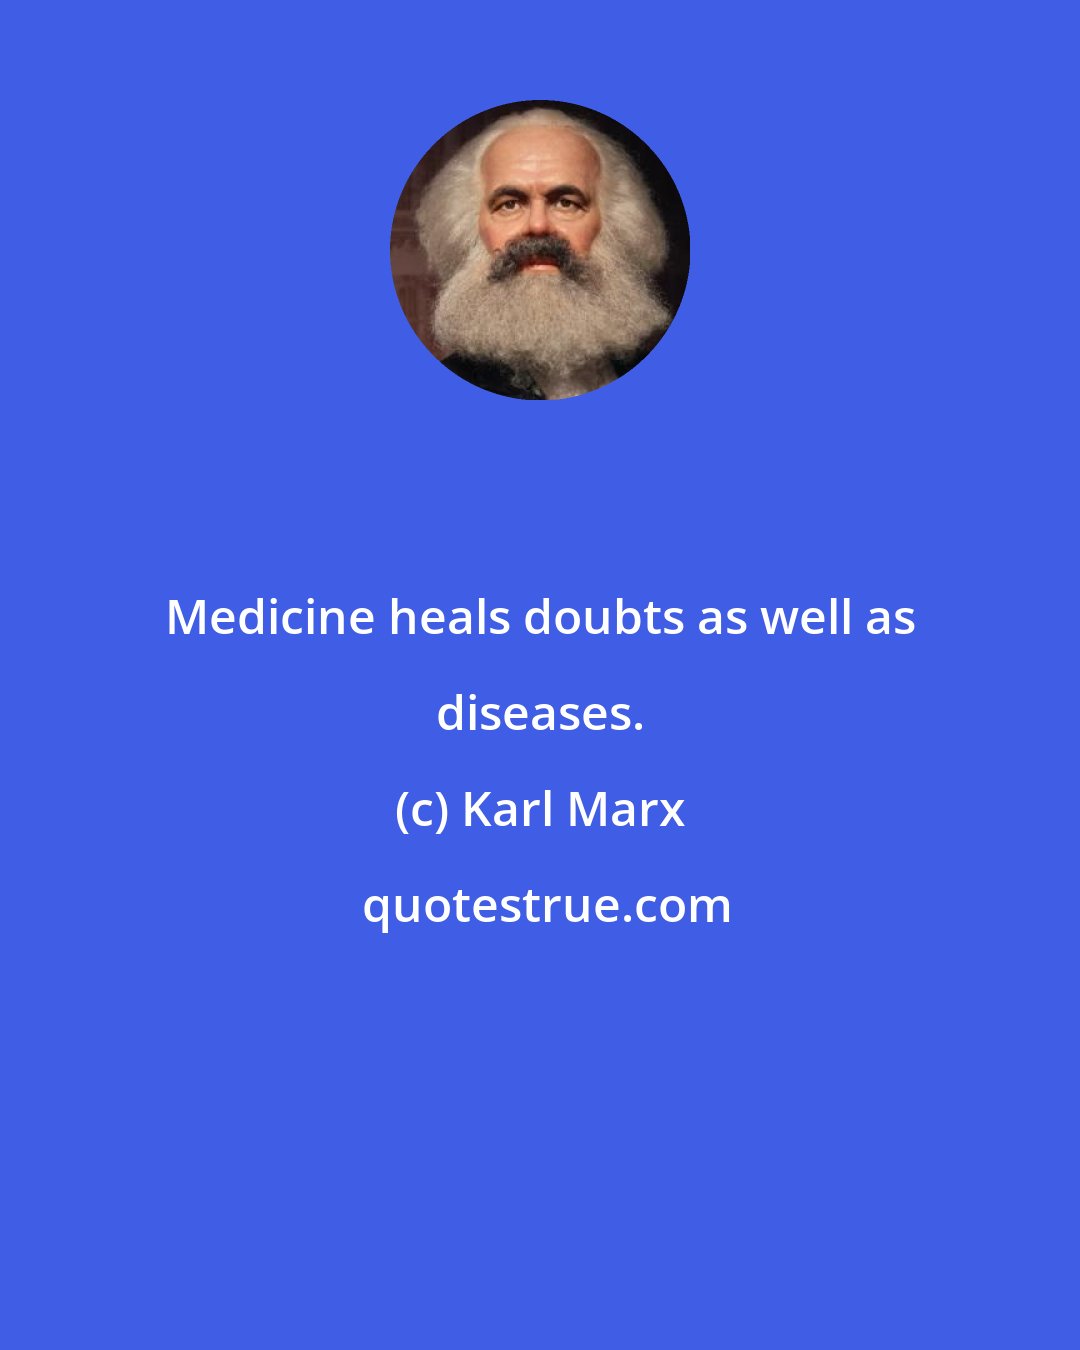 Karl Marx: Medicine heals doubts as well as diseases.